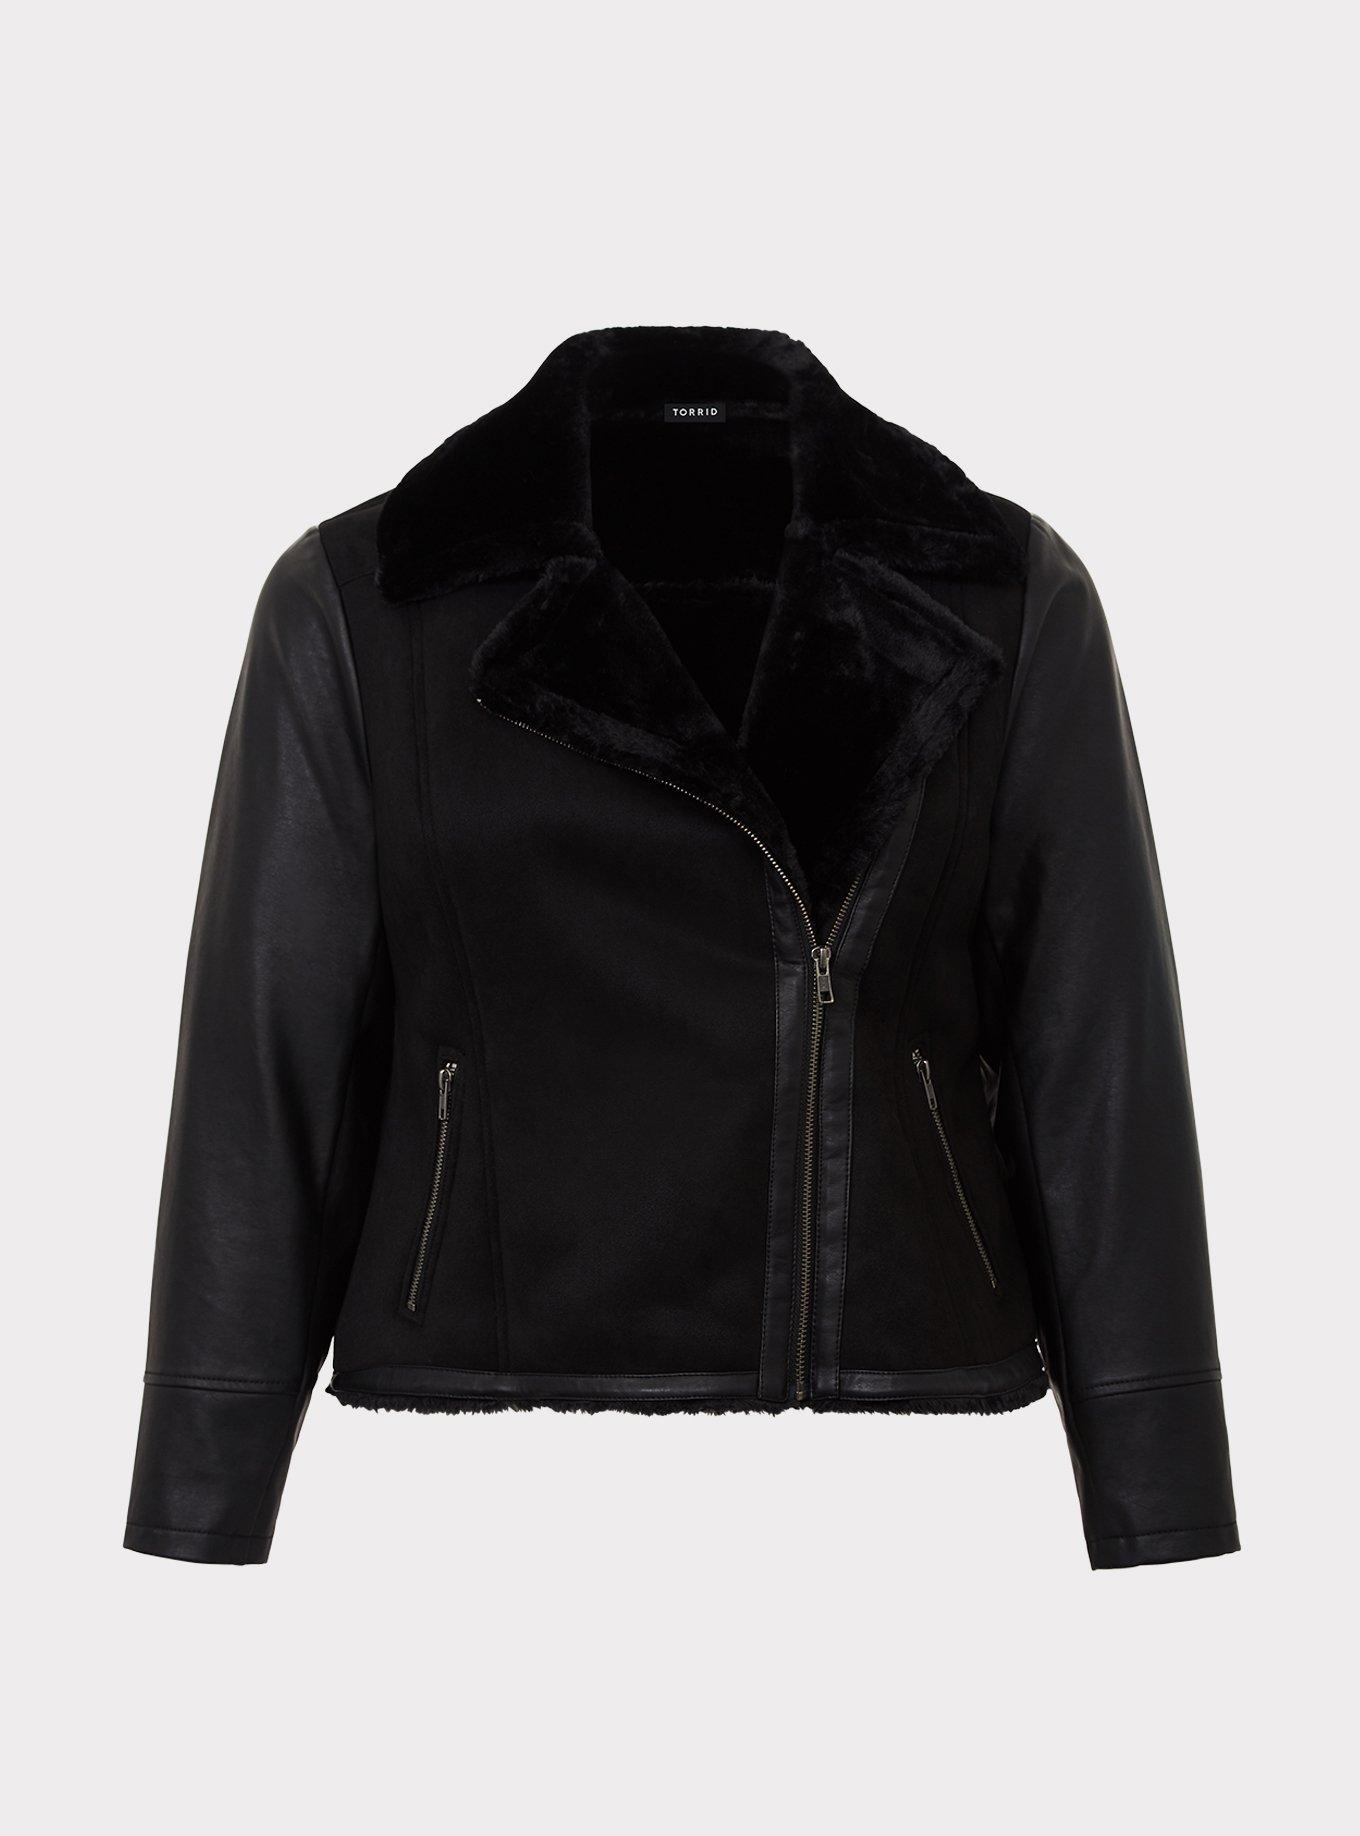 Plus Size - Black Shearling Moto Jacket - Torrid